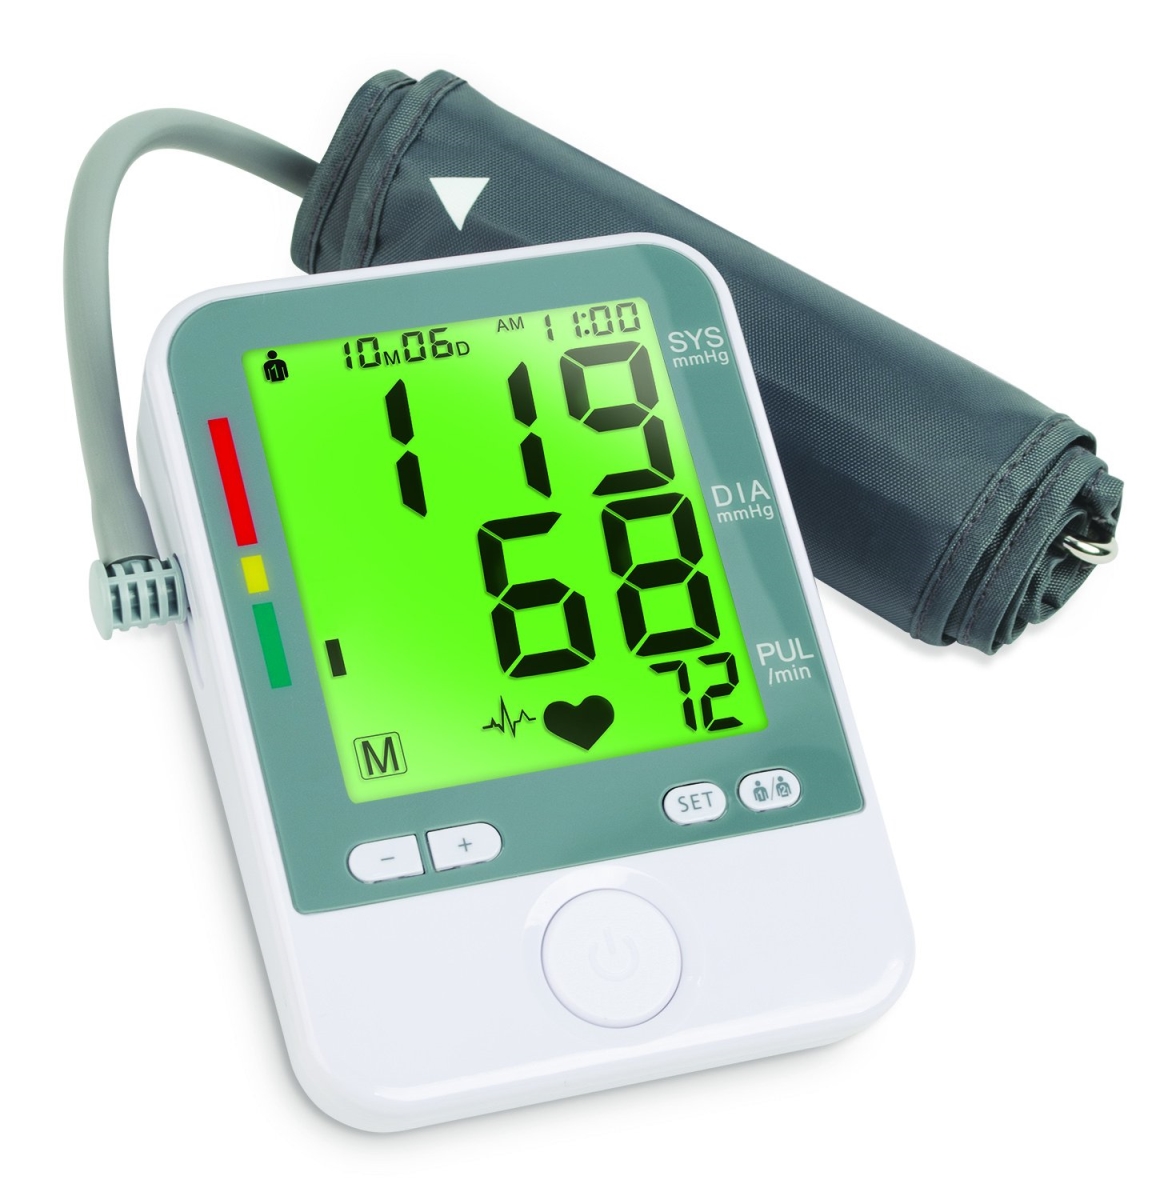 Jb7662 North American Color Code Arm Cuff Blood Pressure Monitor